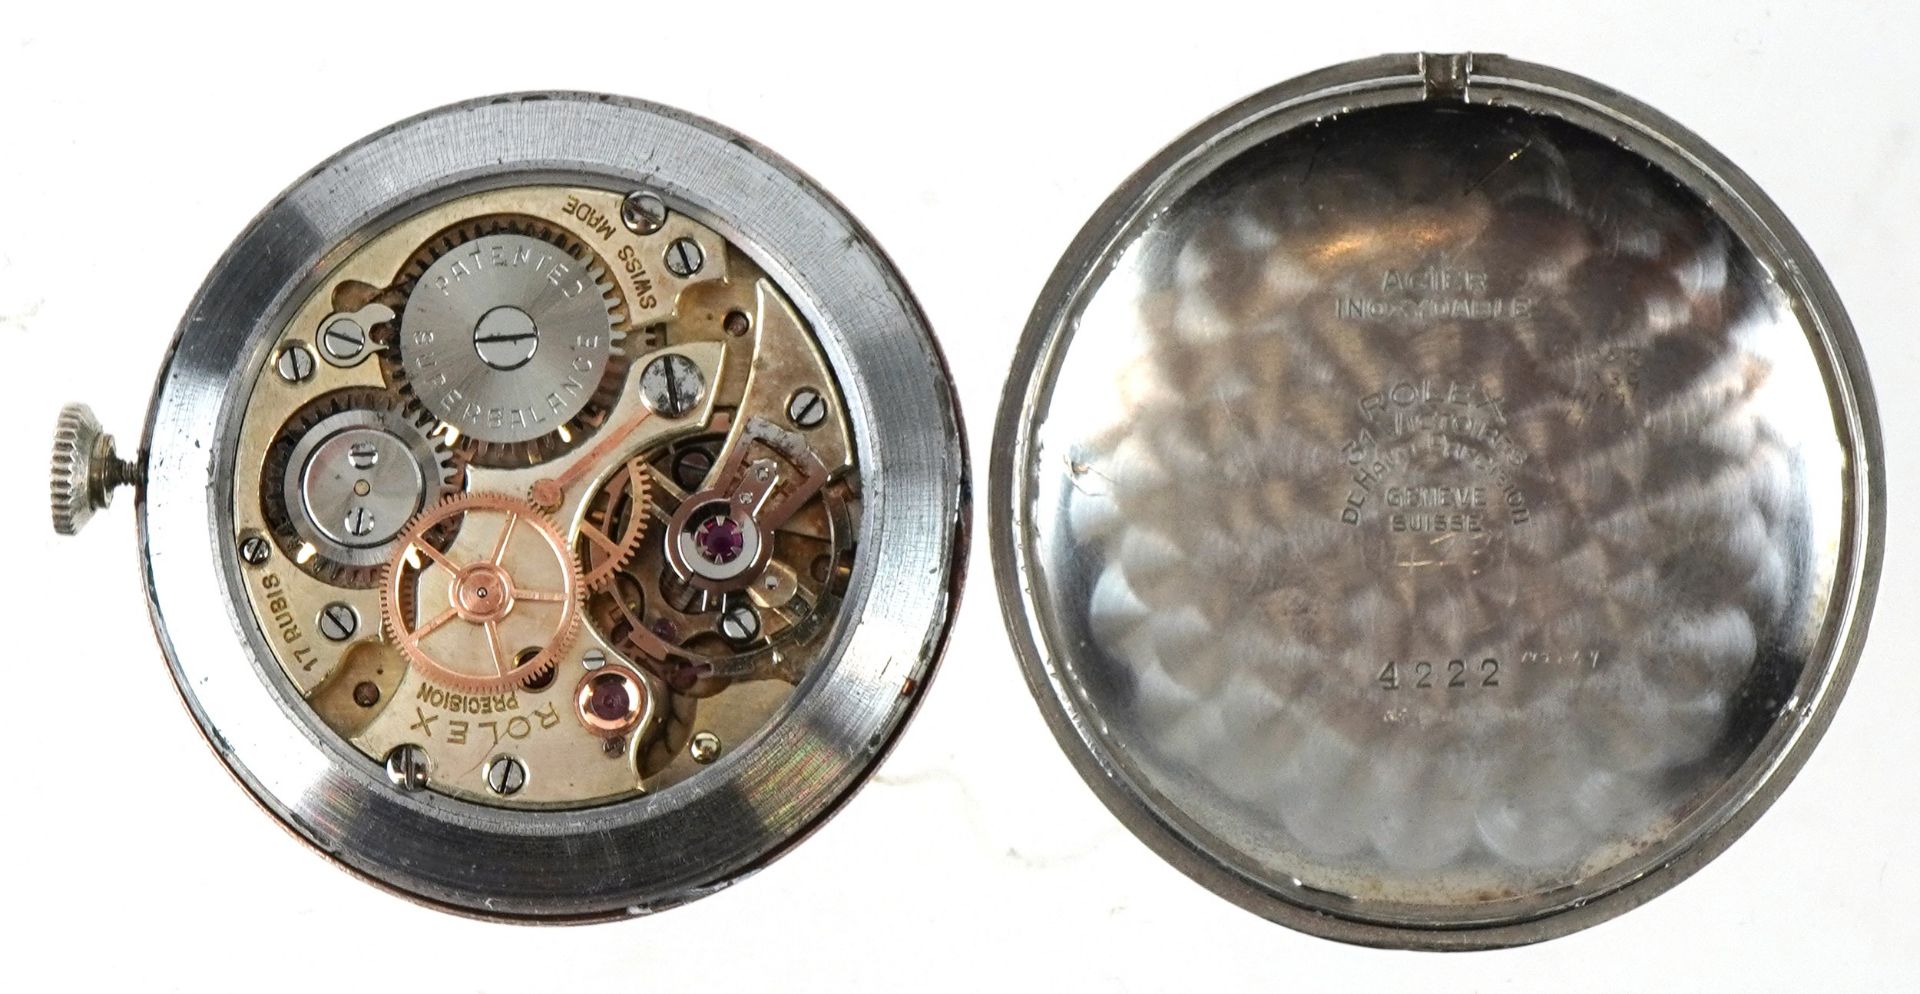 Rolex, gentlemen's Rolex Precision wristwatch, the case numbered 274865, 35mm in diameter - Image 5 of 6